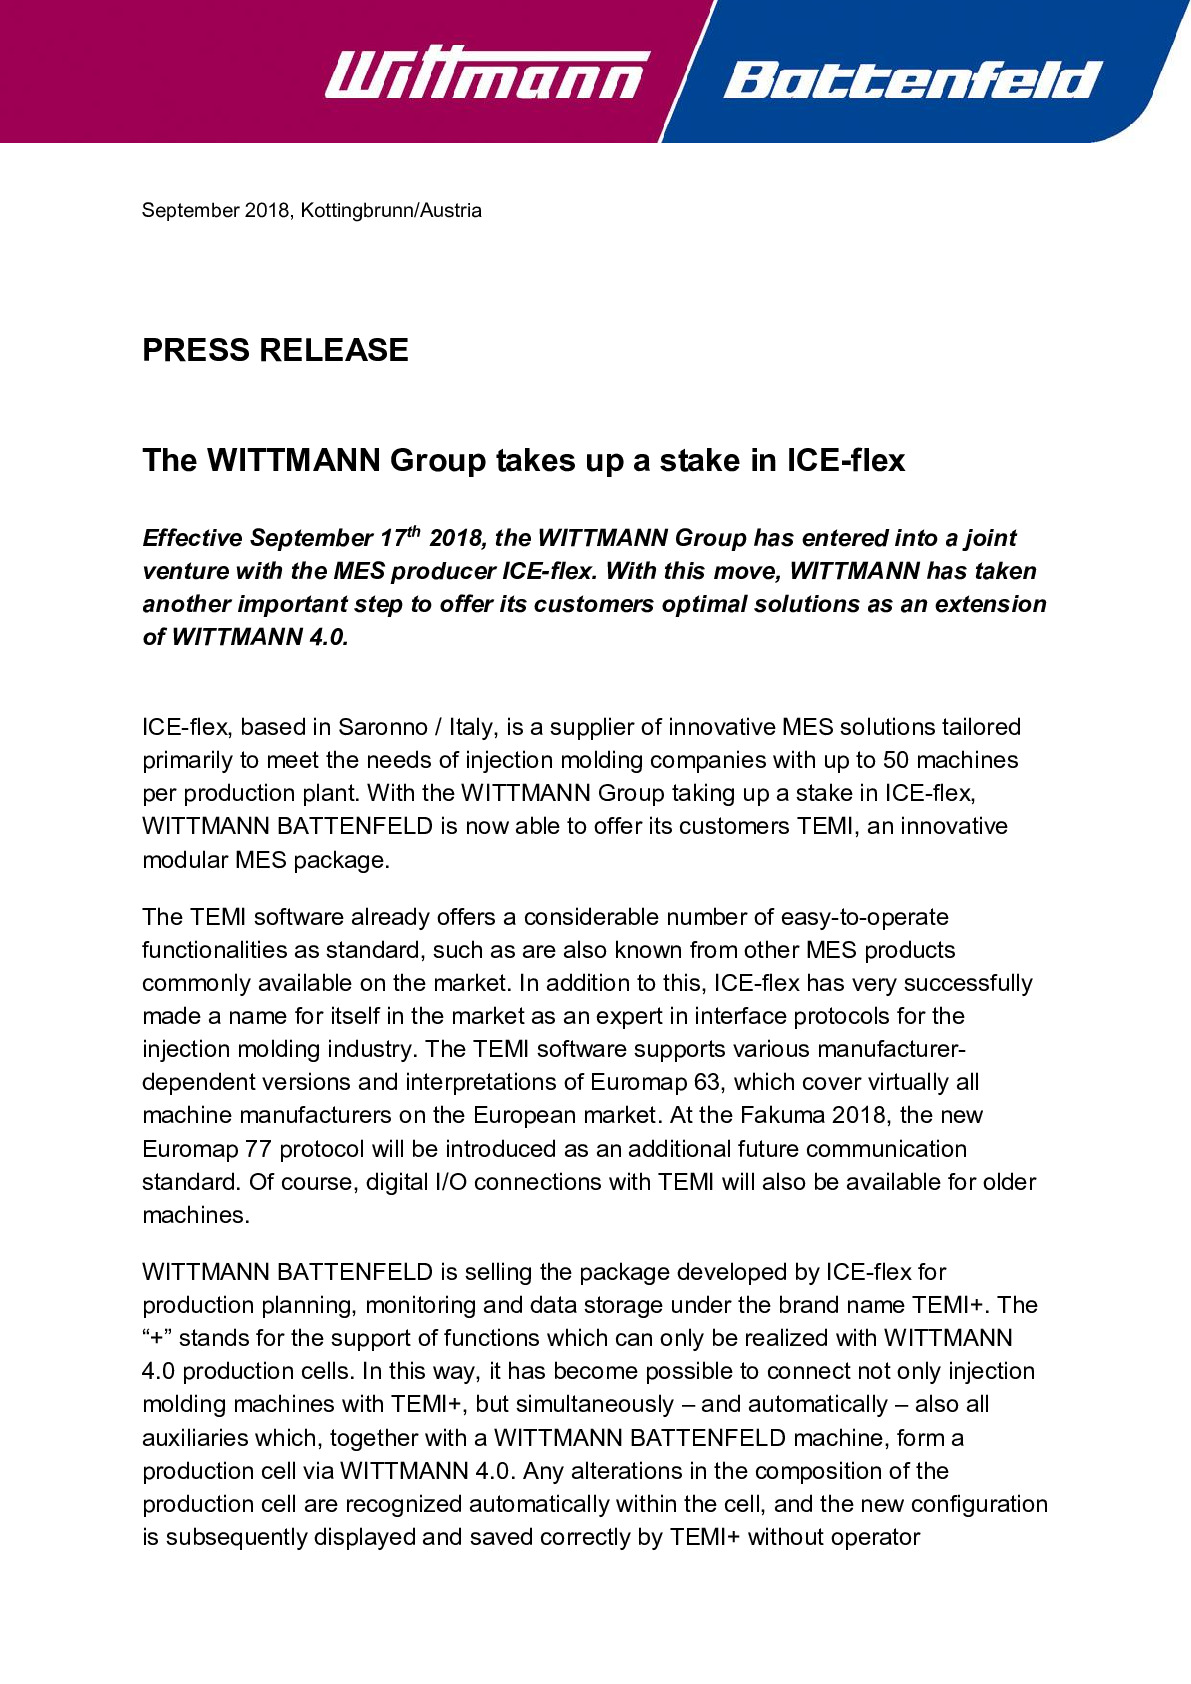 Joint venture: WITTMANN and ICE-flex